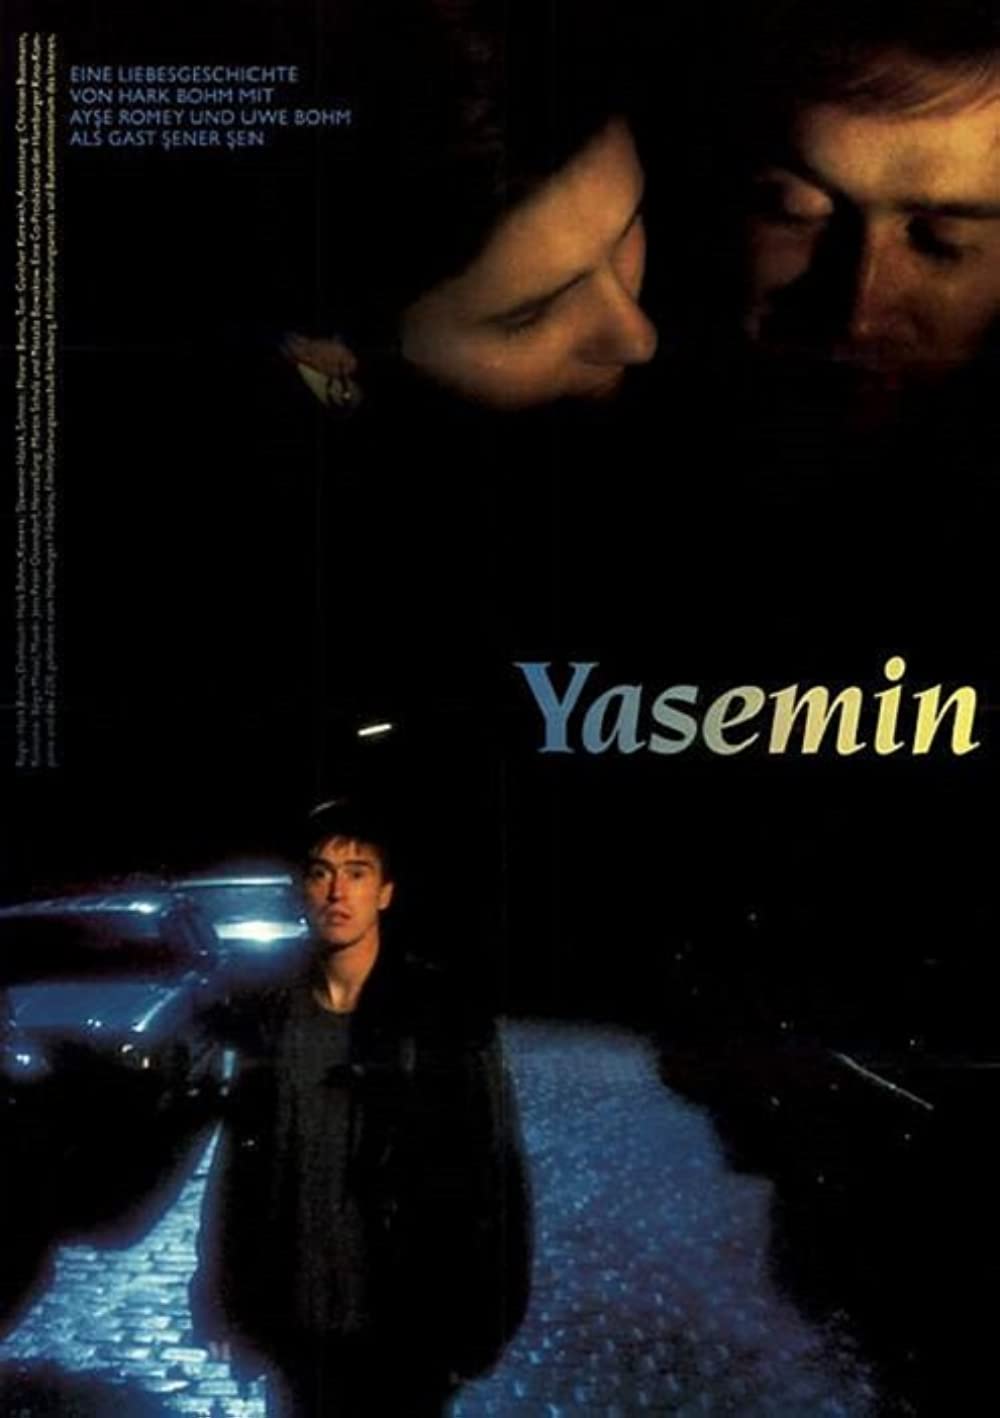 Filmbeschreibung zu Yasemin